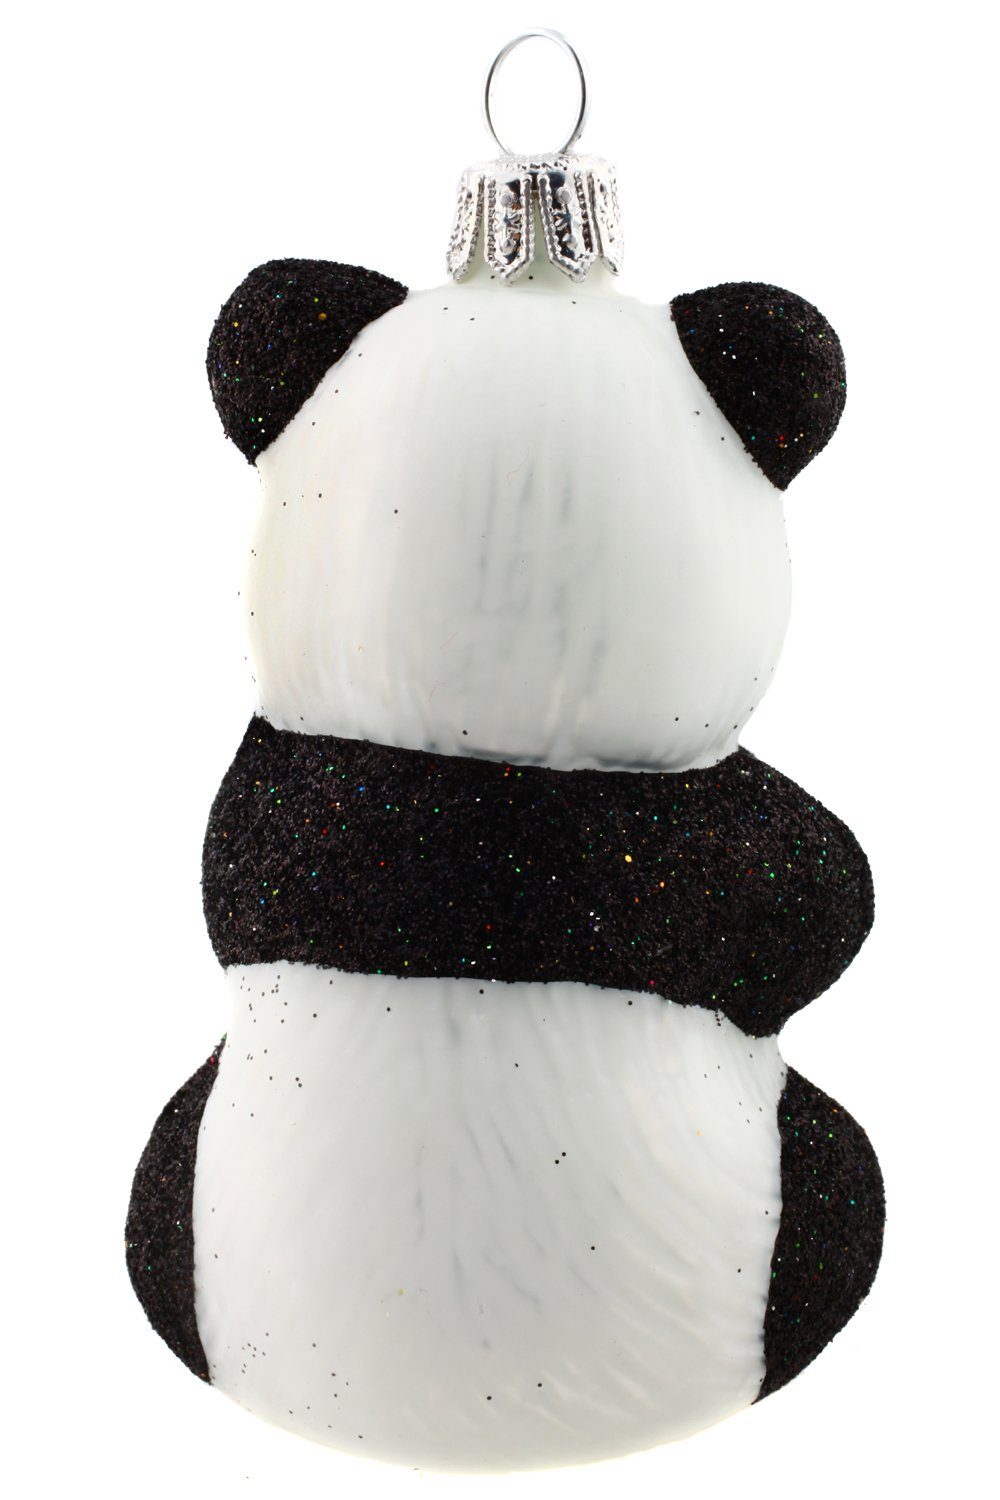 - - Christbaumschmuck handdekoriert Weihnachtskontor Pandabär, mundgeblasen Hamburger Dekohänger